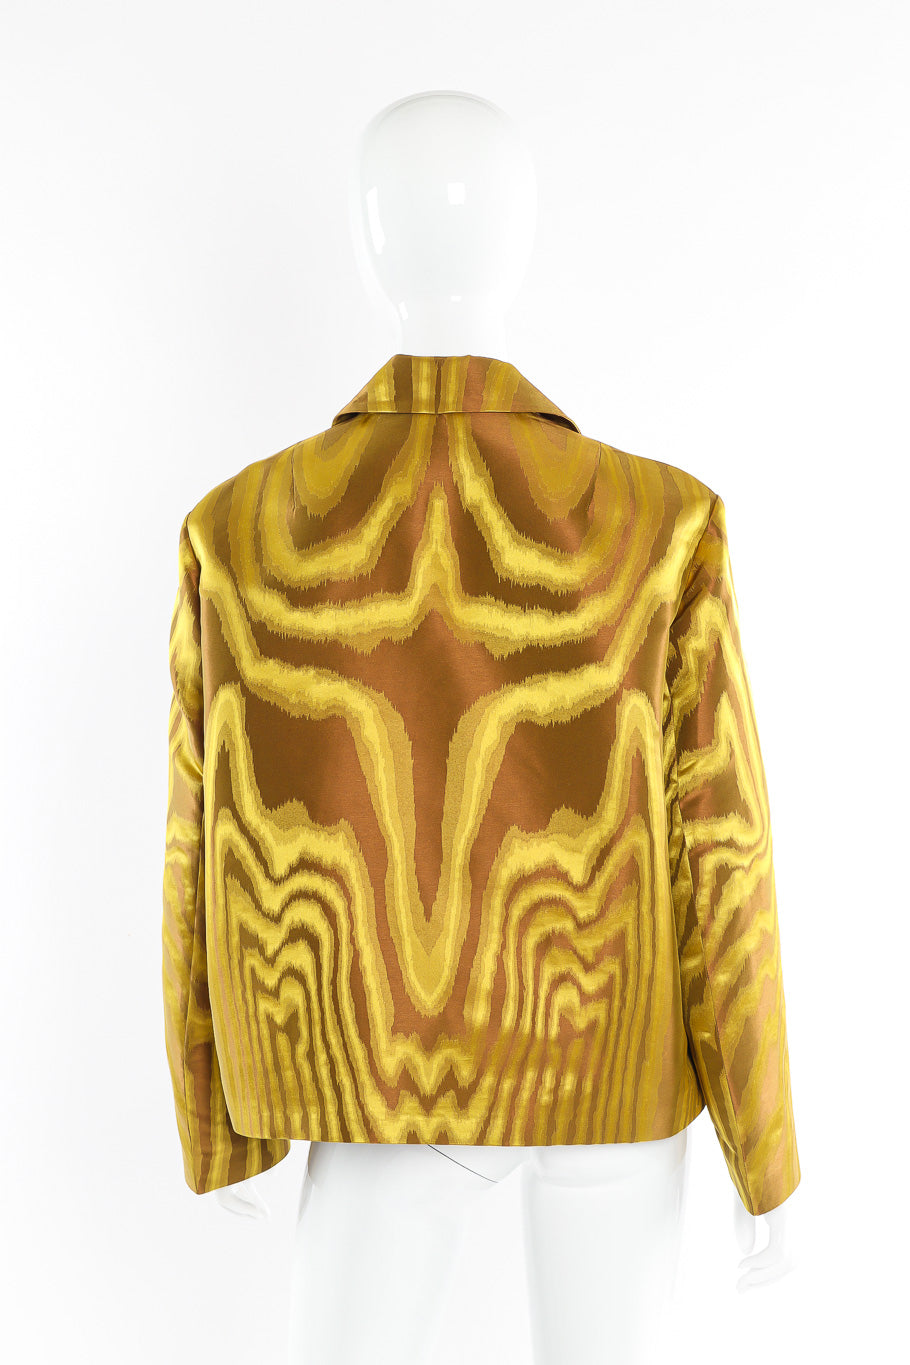 Dries van Noten abstract moire cropped jacket on mannequin @recessla